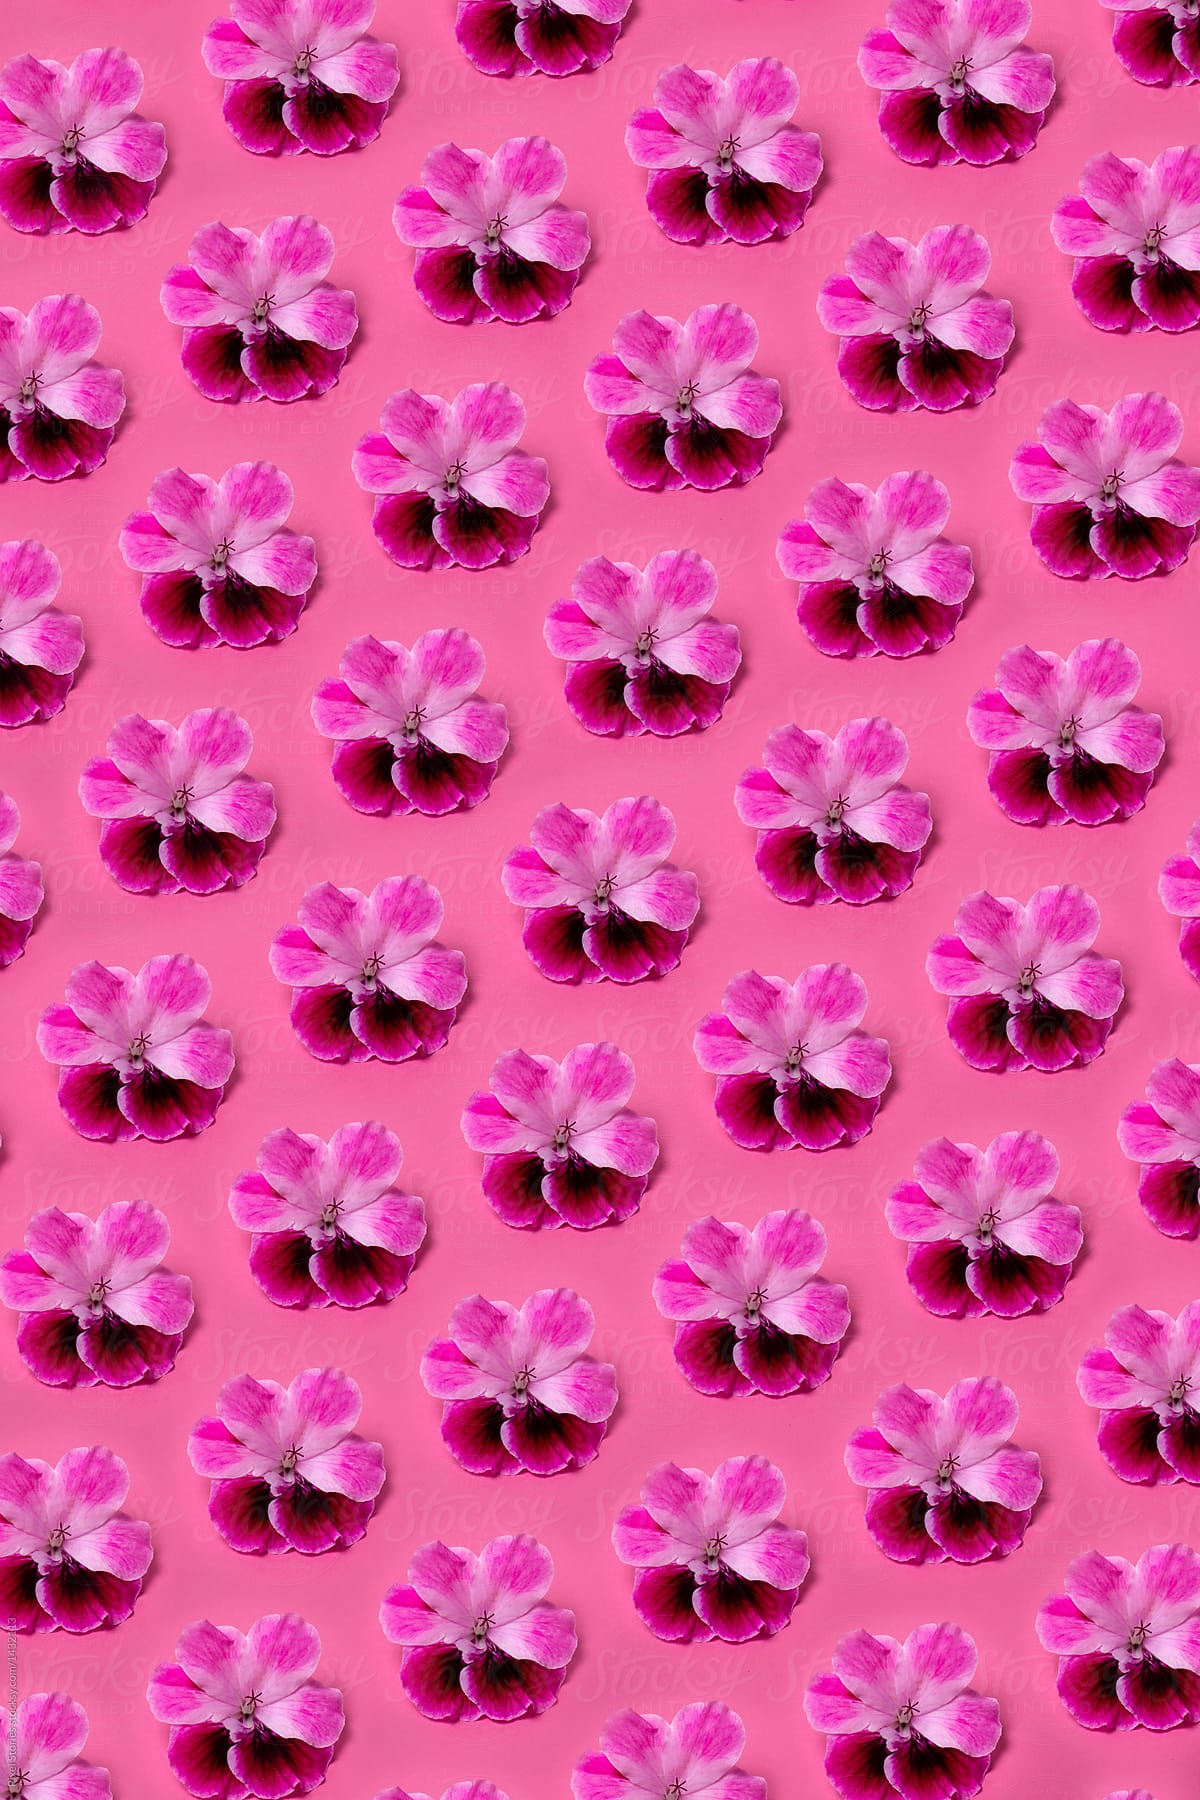 Lilac Geranium flowers background